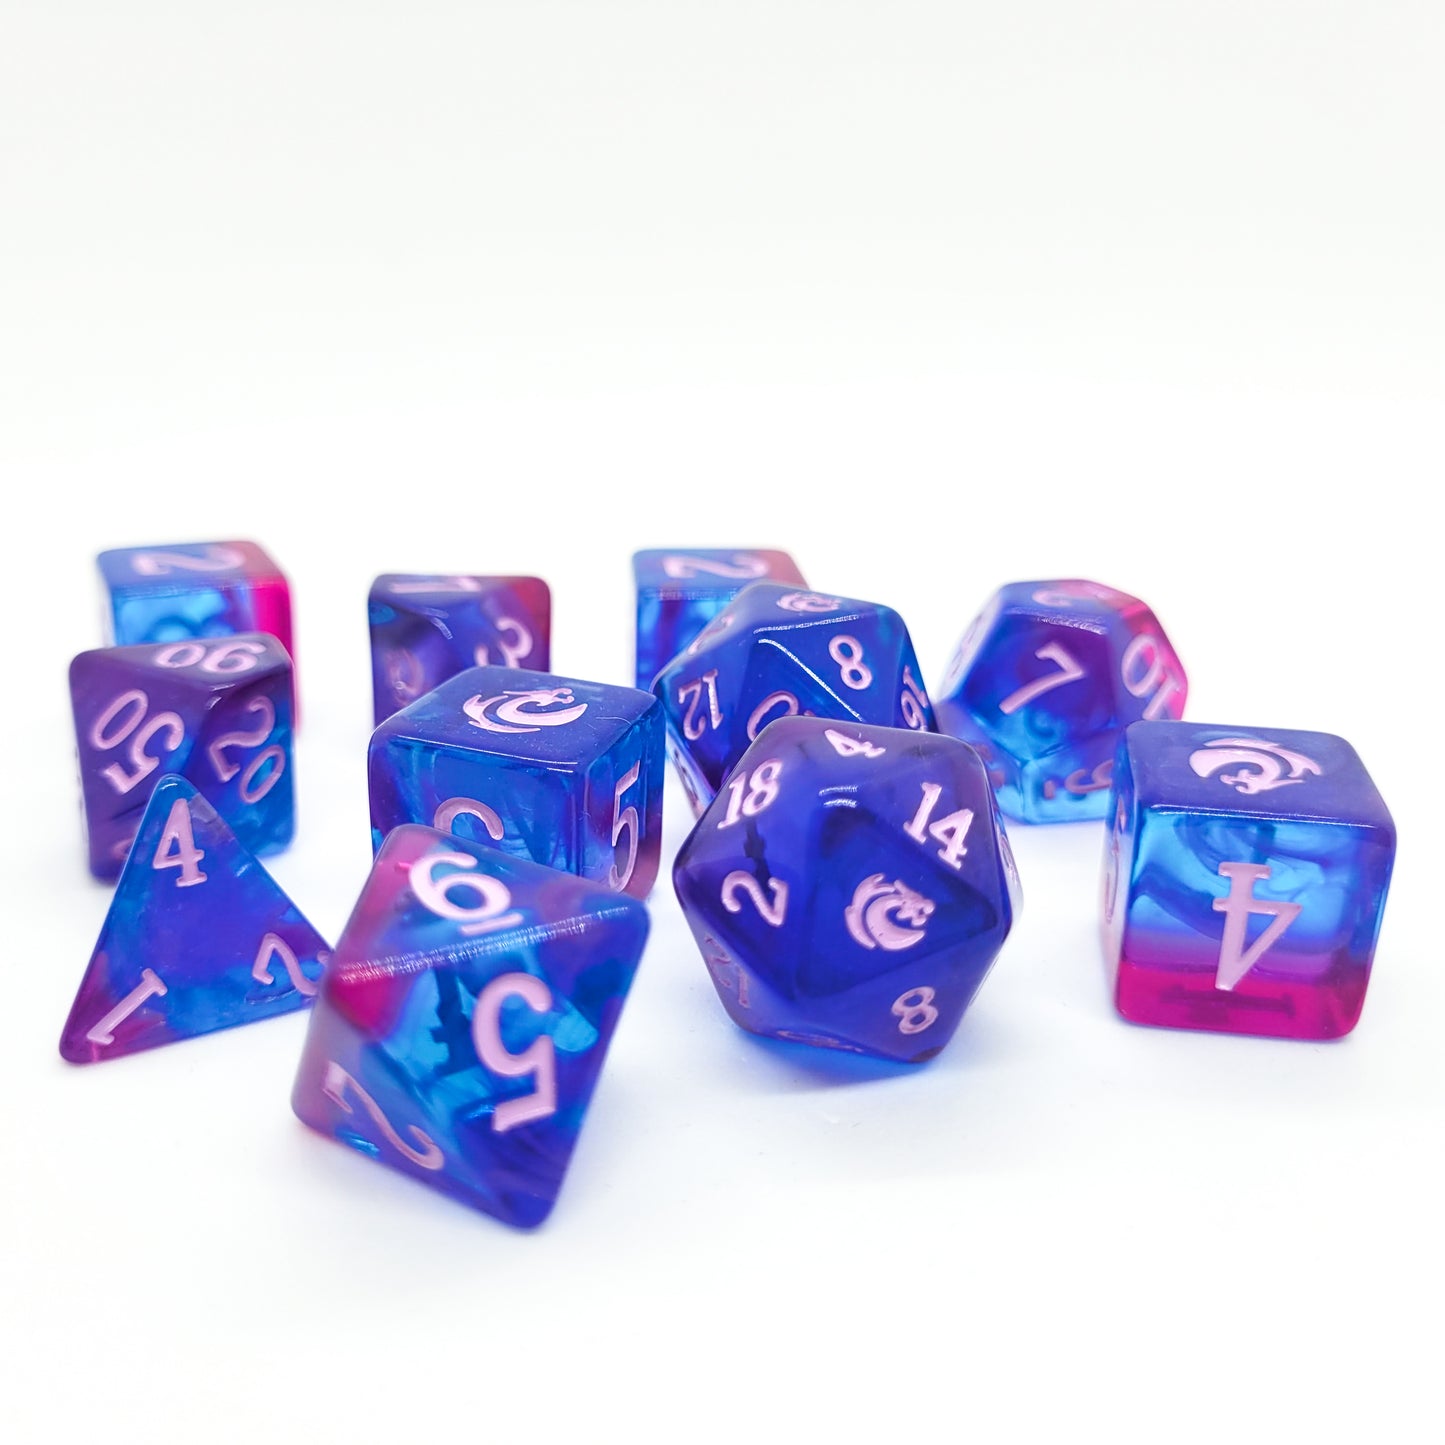 Mystic Storm from Mystic Dragon Games - 11-piece dice set